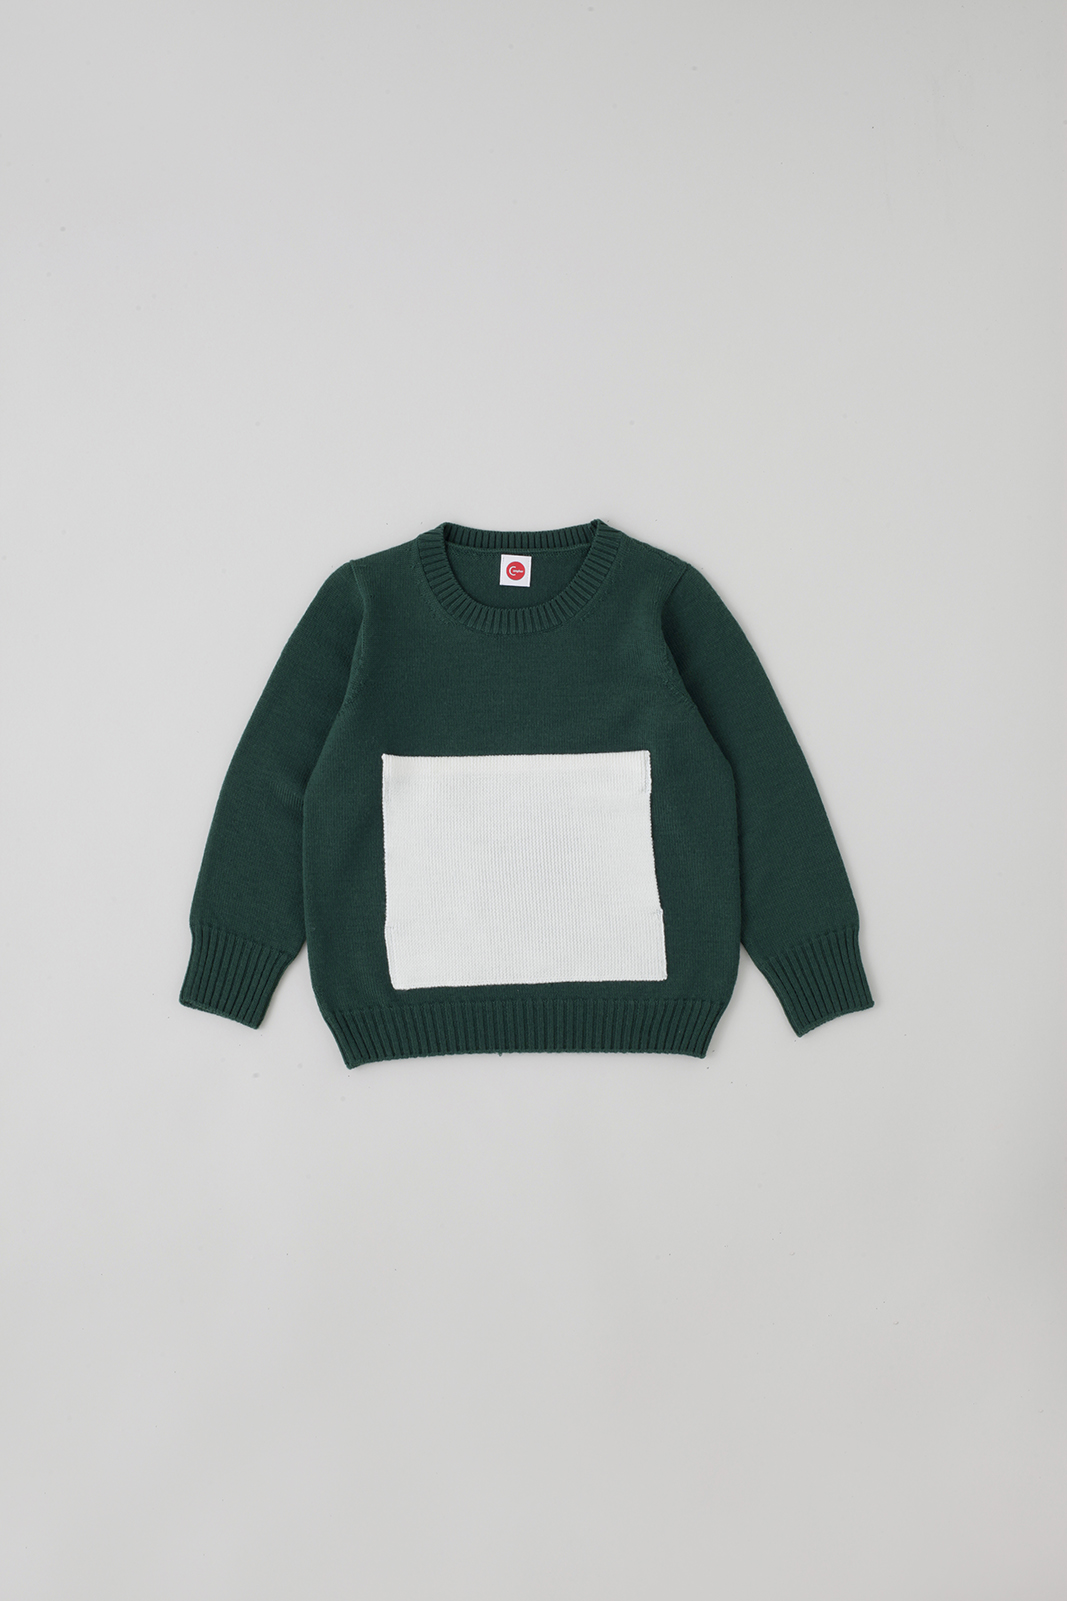 Camphor カンフル kids こども 子供服 ■sweater 日本製 madeinjapan